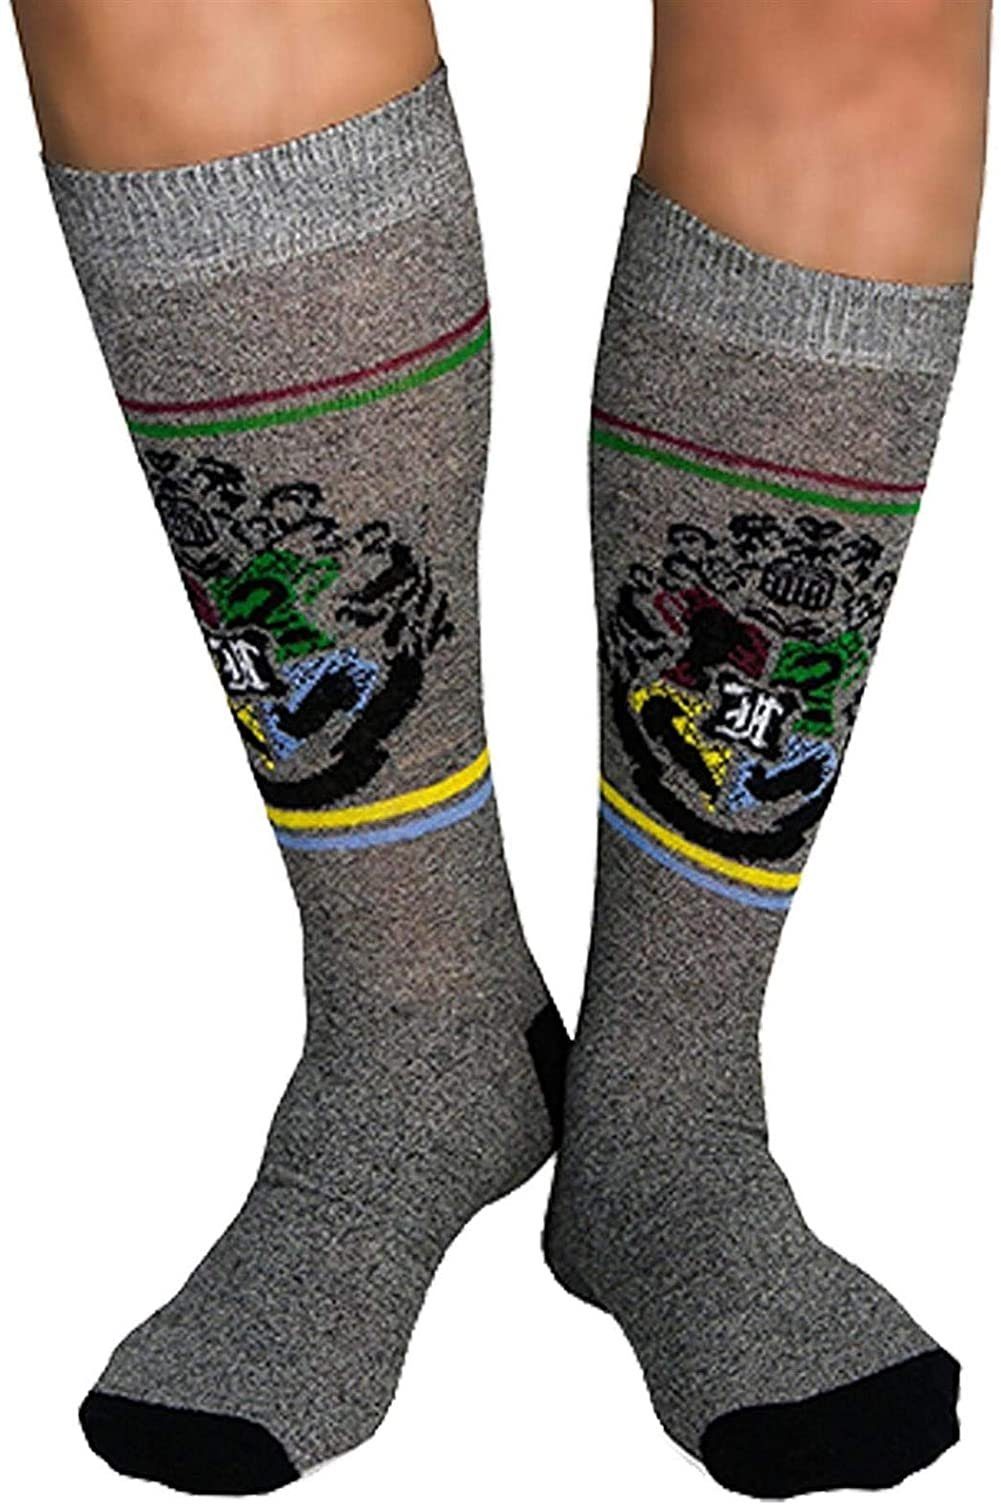 Harry Potter Feinsocken 2x Harry Potter Hogwarts - 2er Pack Socken Erwachsene + Jugendliche Strümpfe Herren und Jungen Gr.39 40 41 42 43 44 45